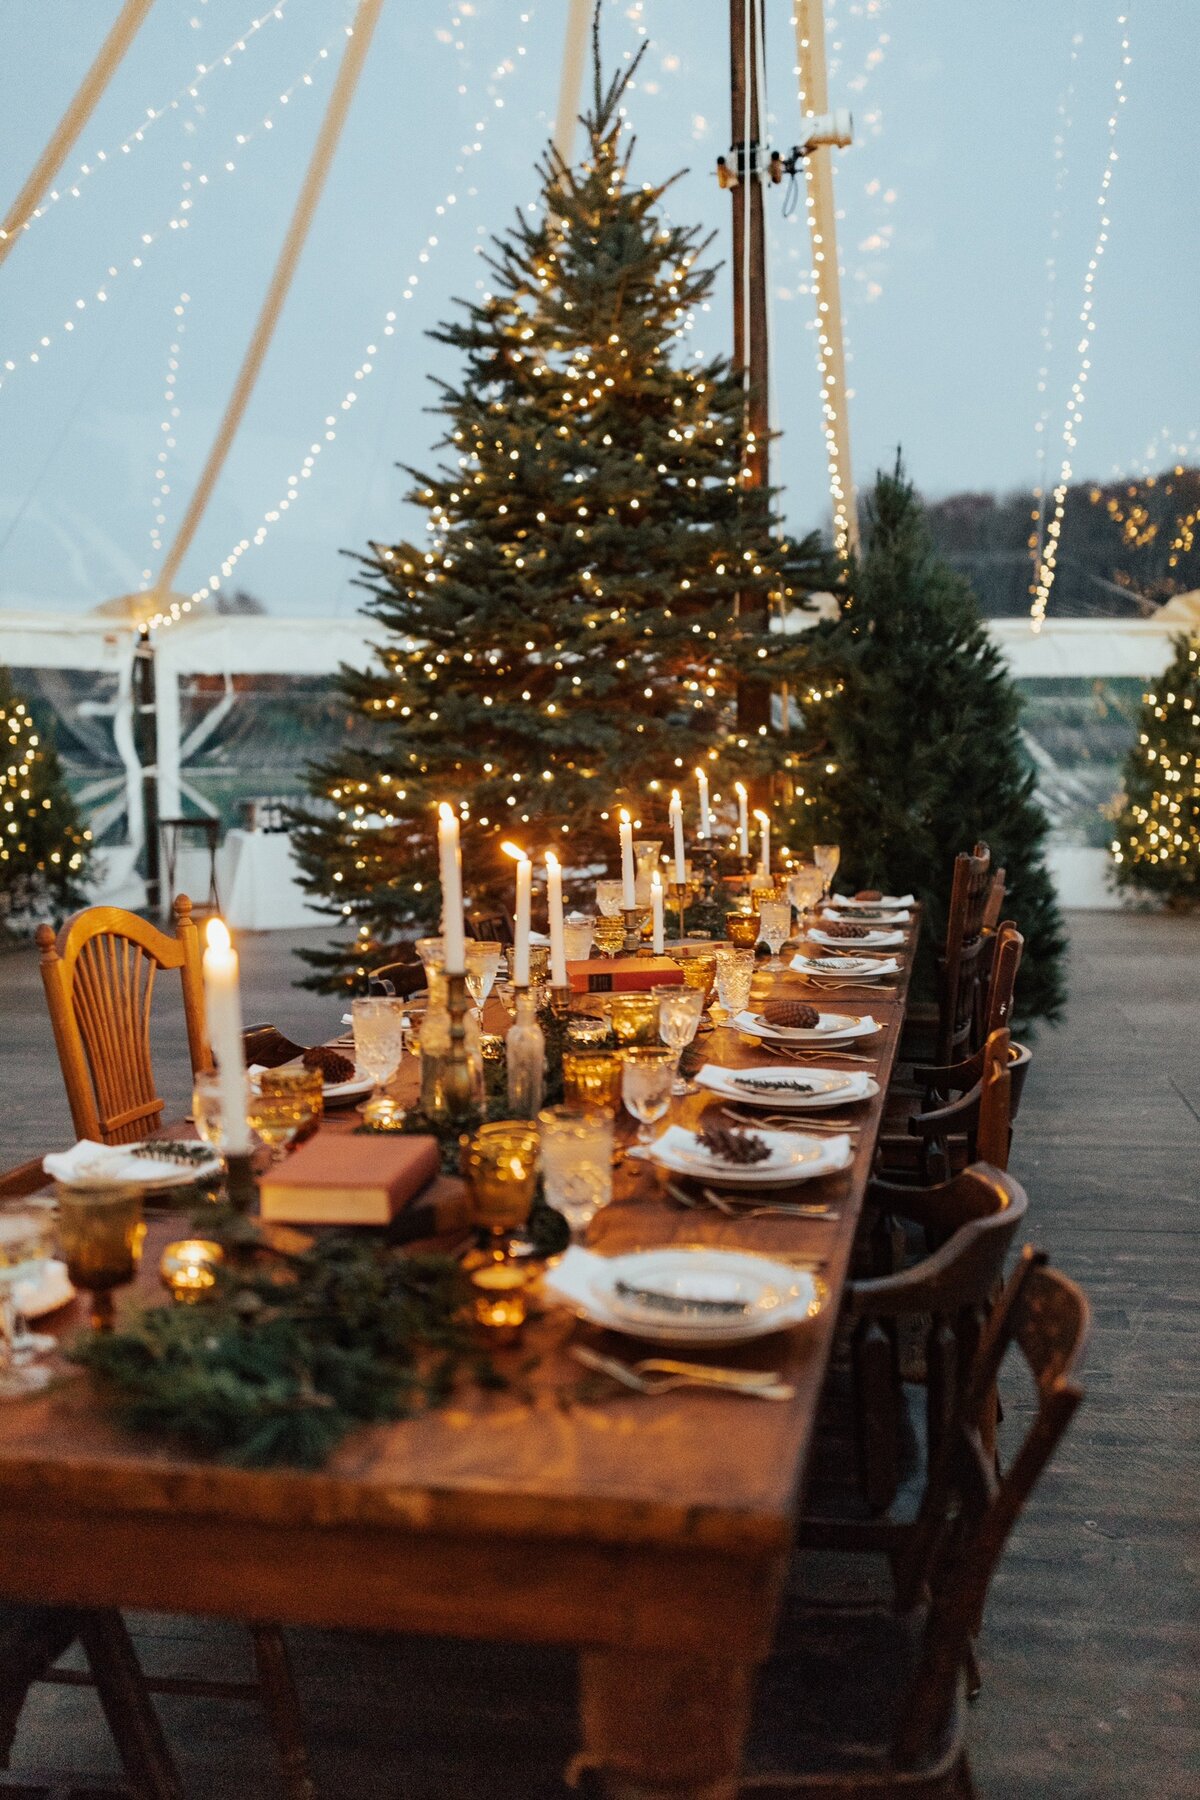 Christy-l-Johnston-Photography-Monica-Relyea-Events-Noelle-Downing-Instagram-Noelle_s-Favorite-Day-Wedding-Battenfelds-Christmas-tree-farm-Red-Hook-New-York-Hudson-Valley-upstate-november-2019-IMG_6635